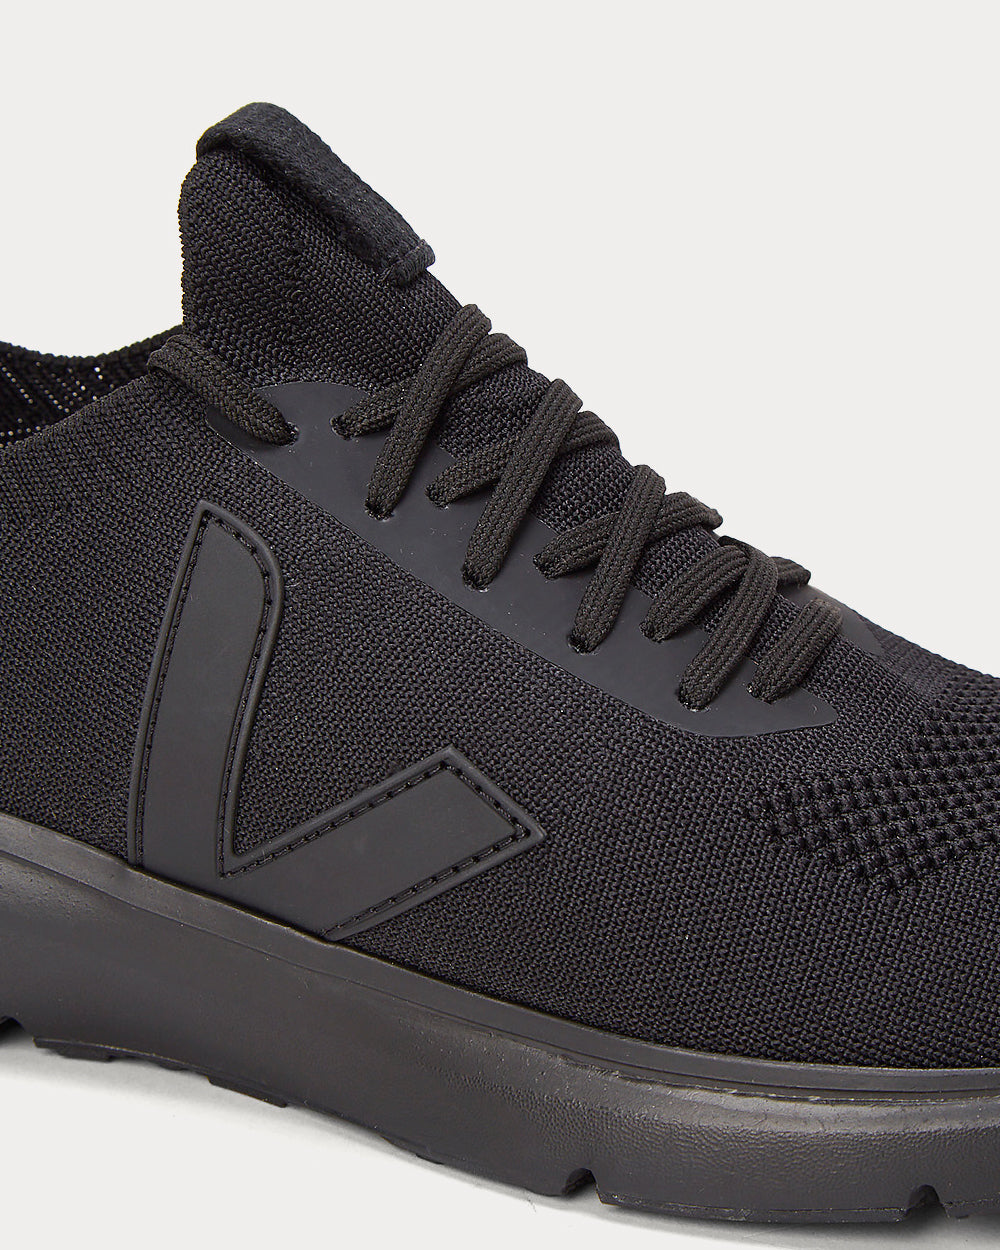 Veja x Rick Owens - Runner Style 2 V-Knit Black Low Top Sneakers